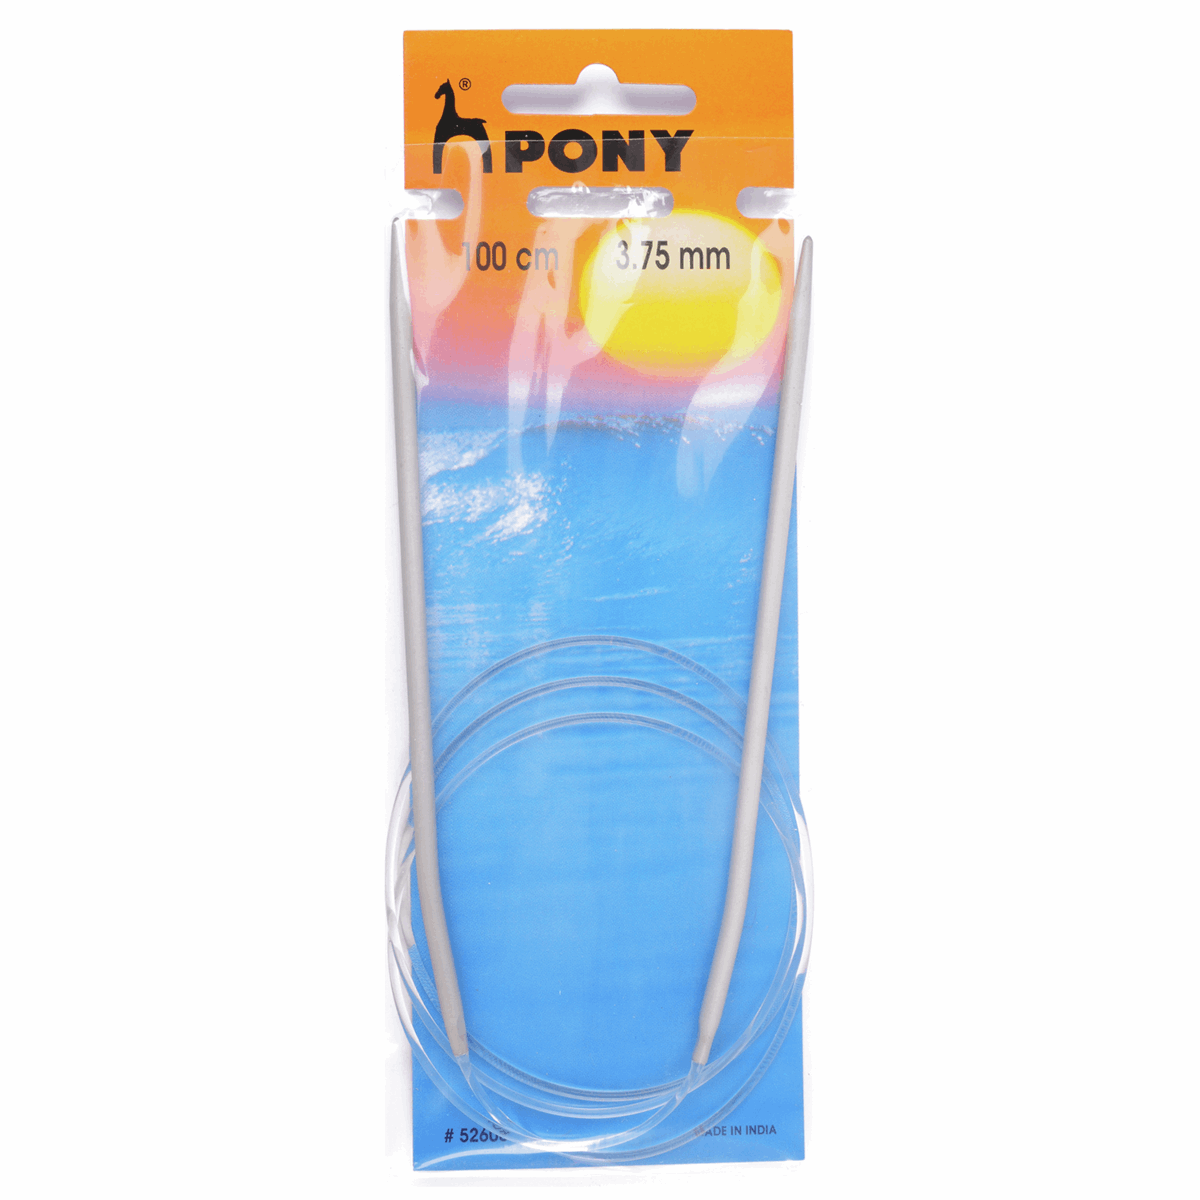 PONY Classic Circular Fixed Knitting Pins - 100cm x 3.75mm